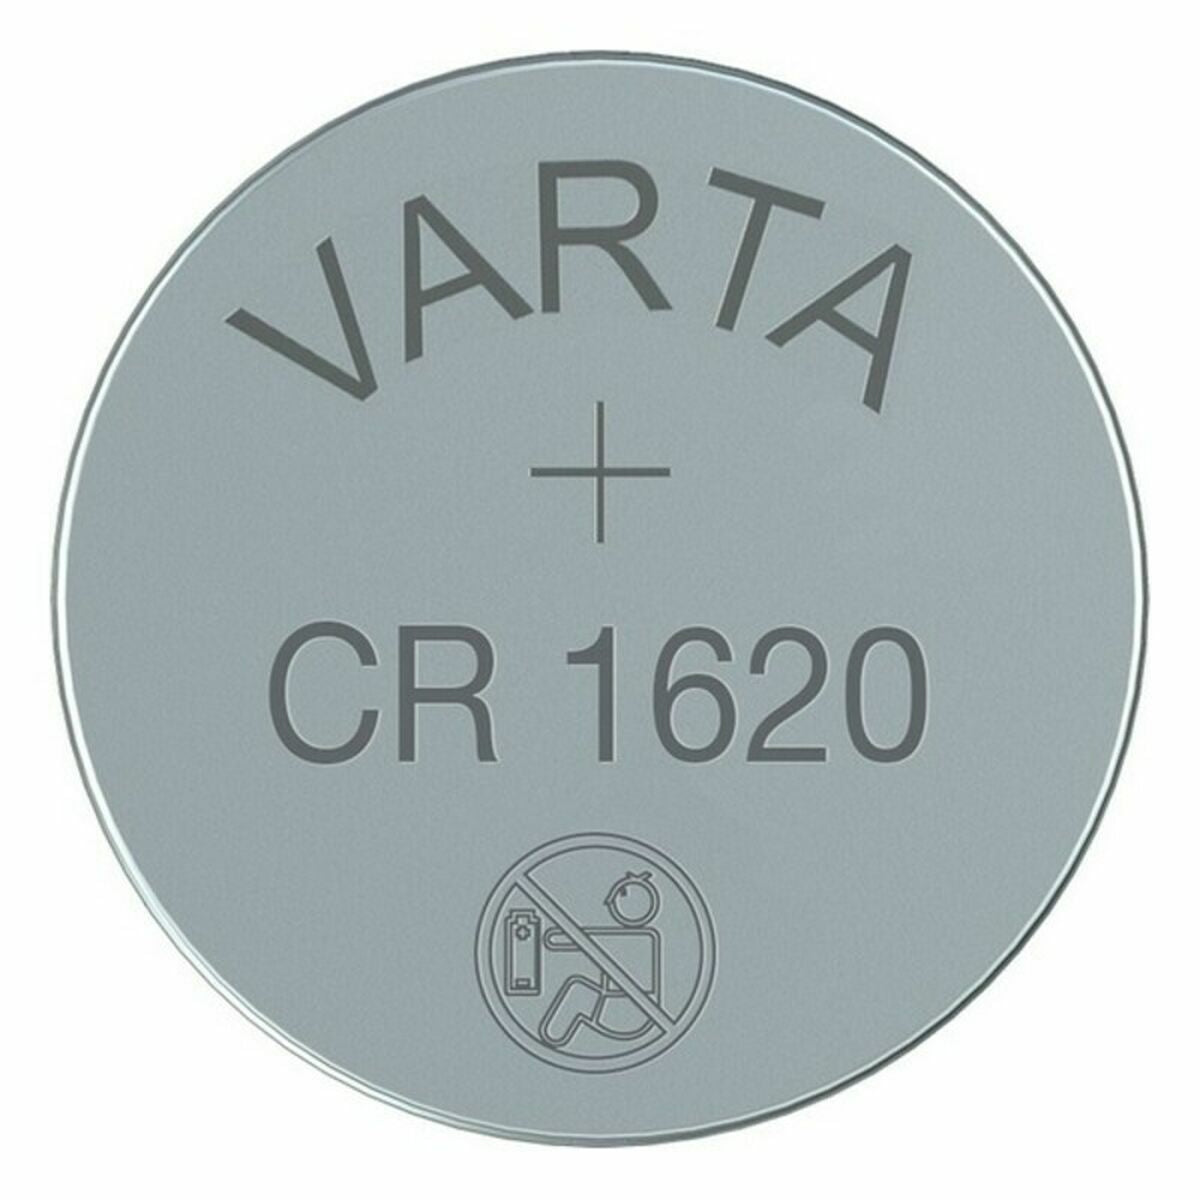 Lithium-Knopfzelle Varta 1x 3V CR 1620 CR1620 3 V 70 mAh 1.55 V